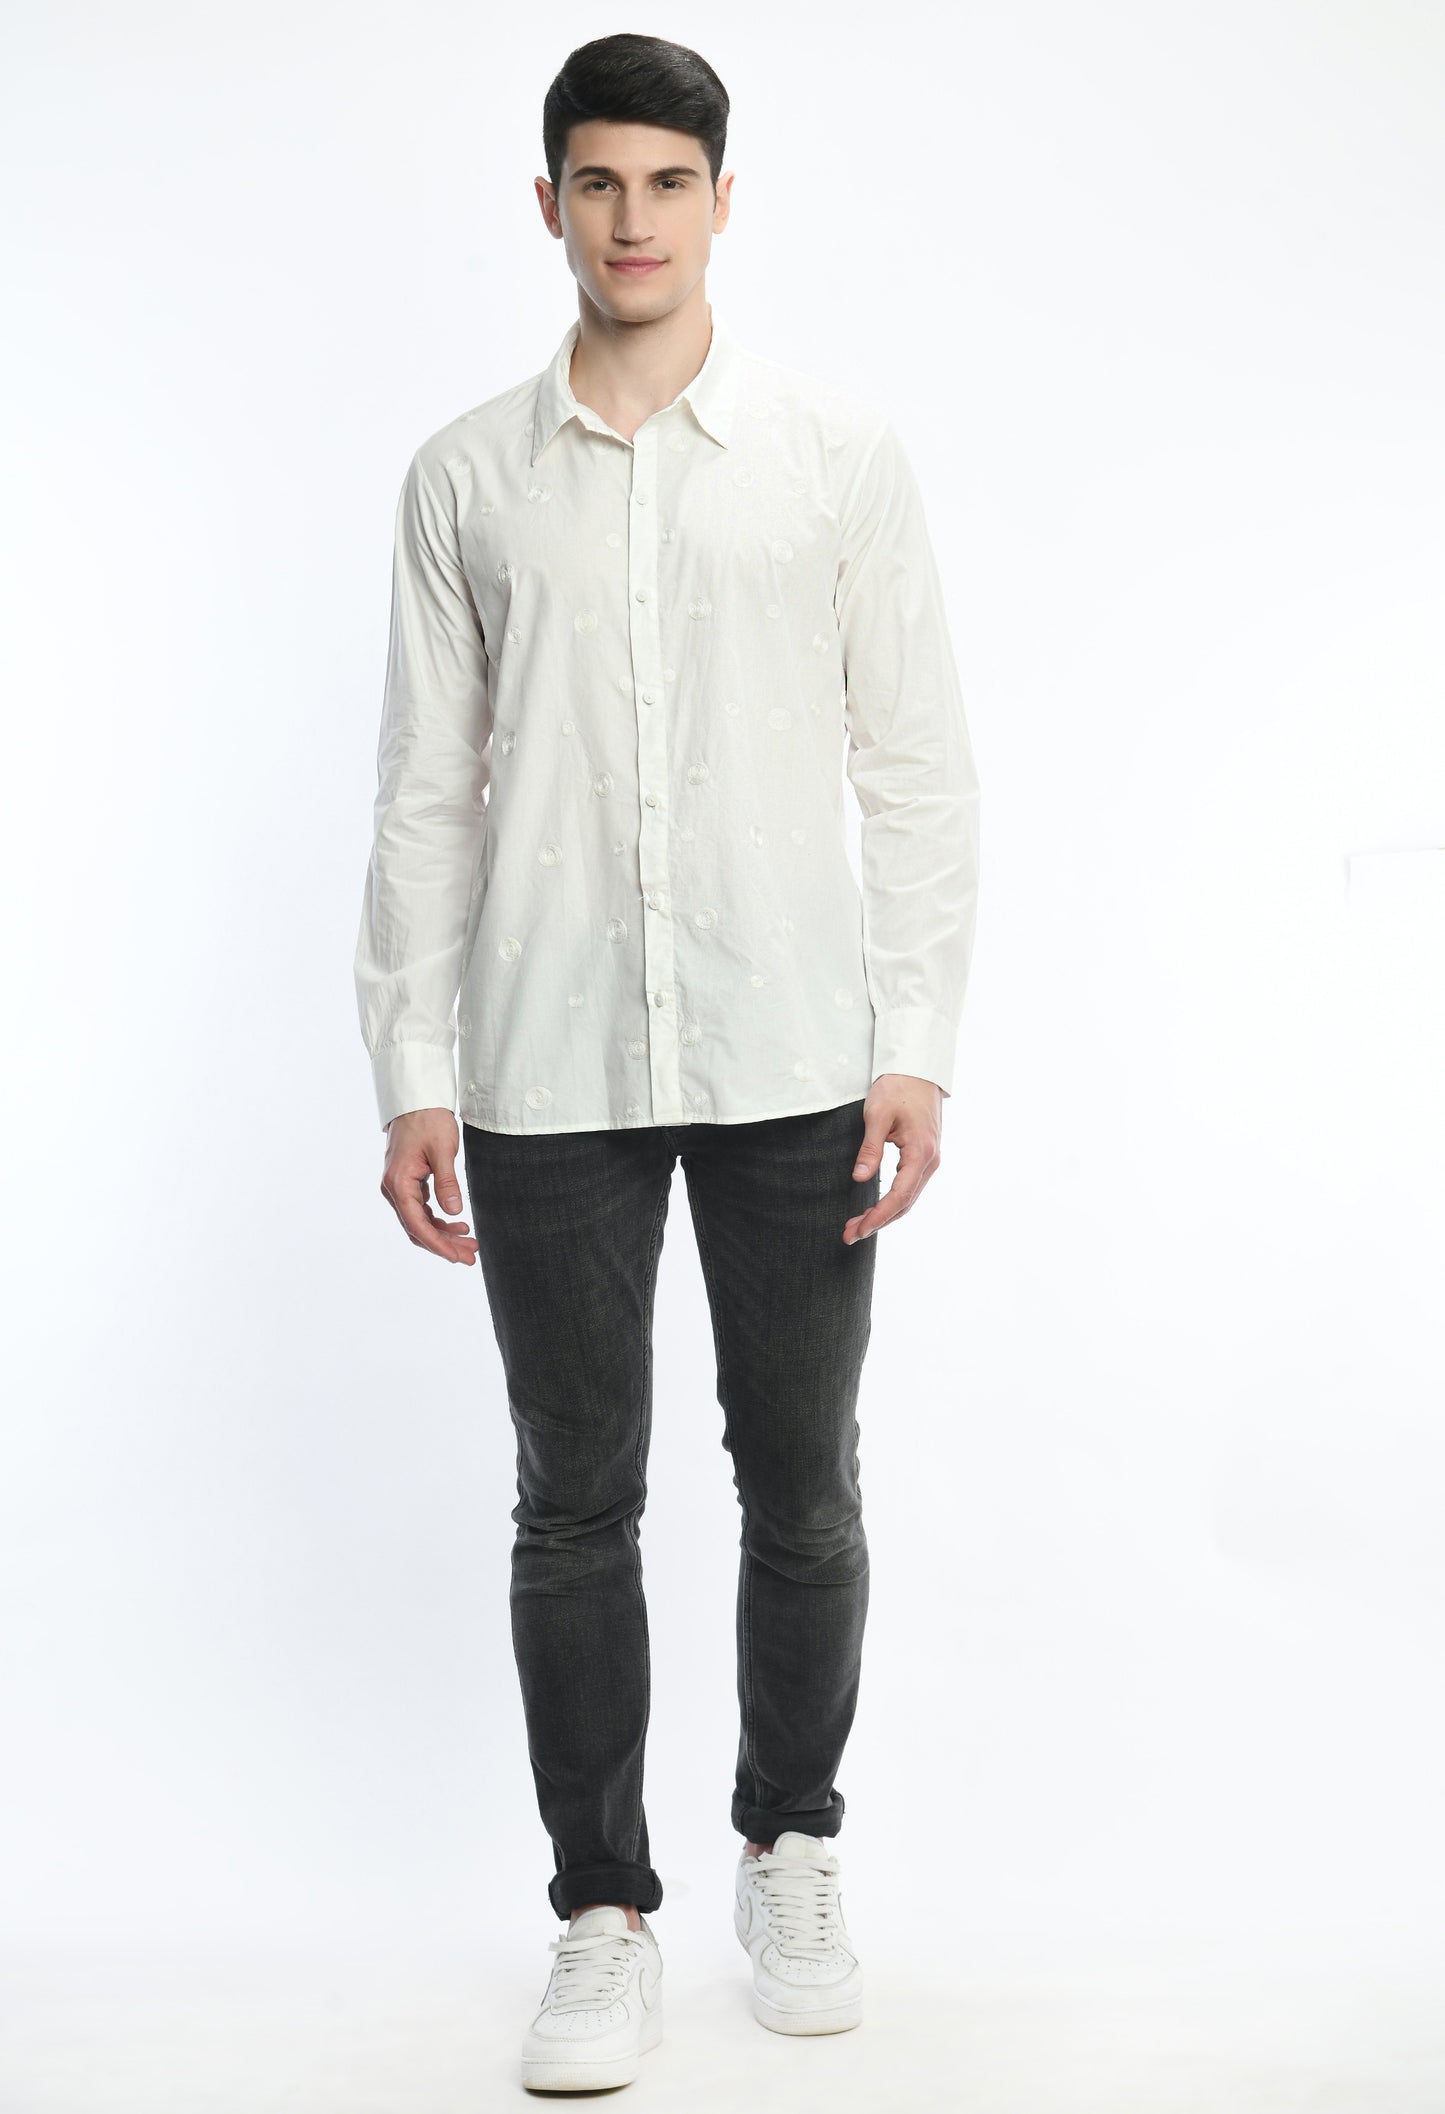 A white cotton shirt showcasing tone on tone thread embroidery